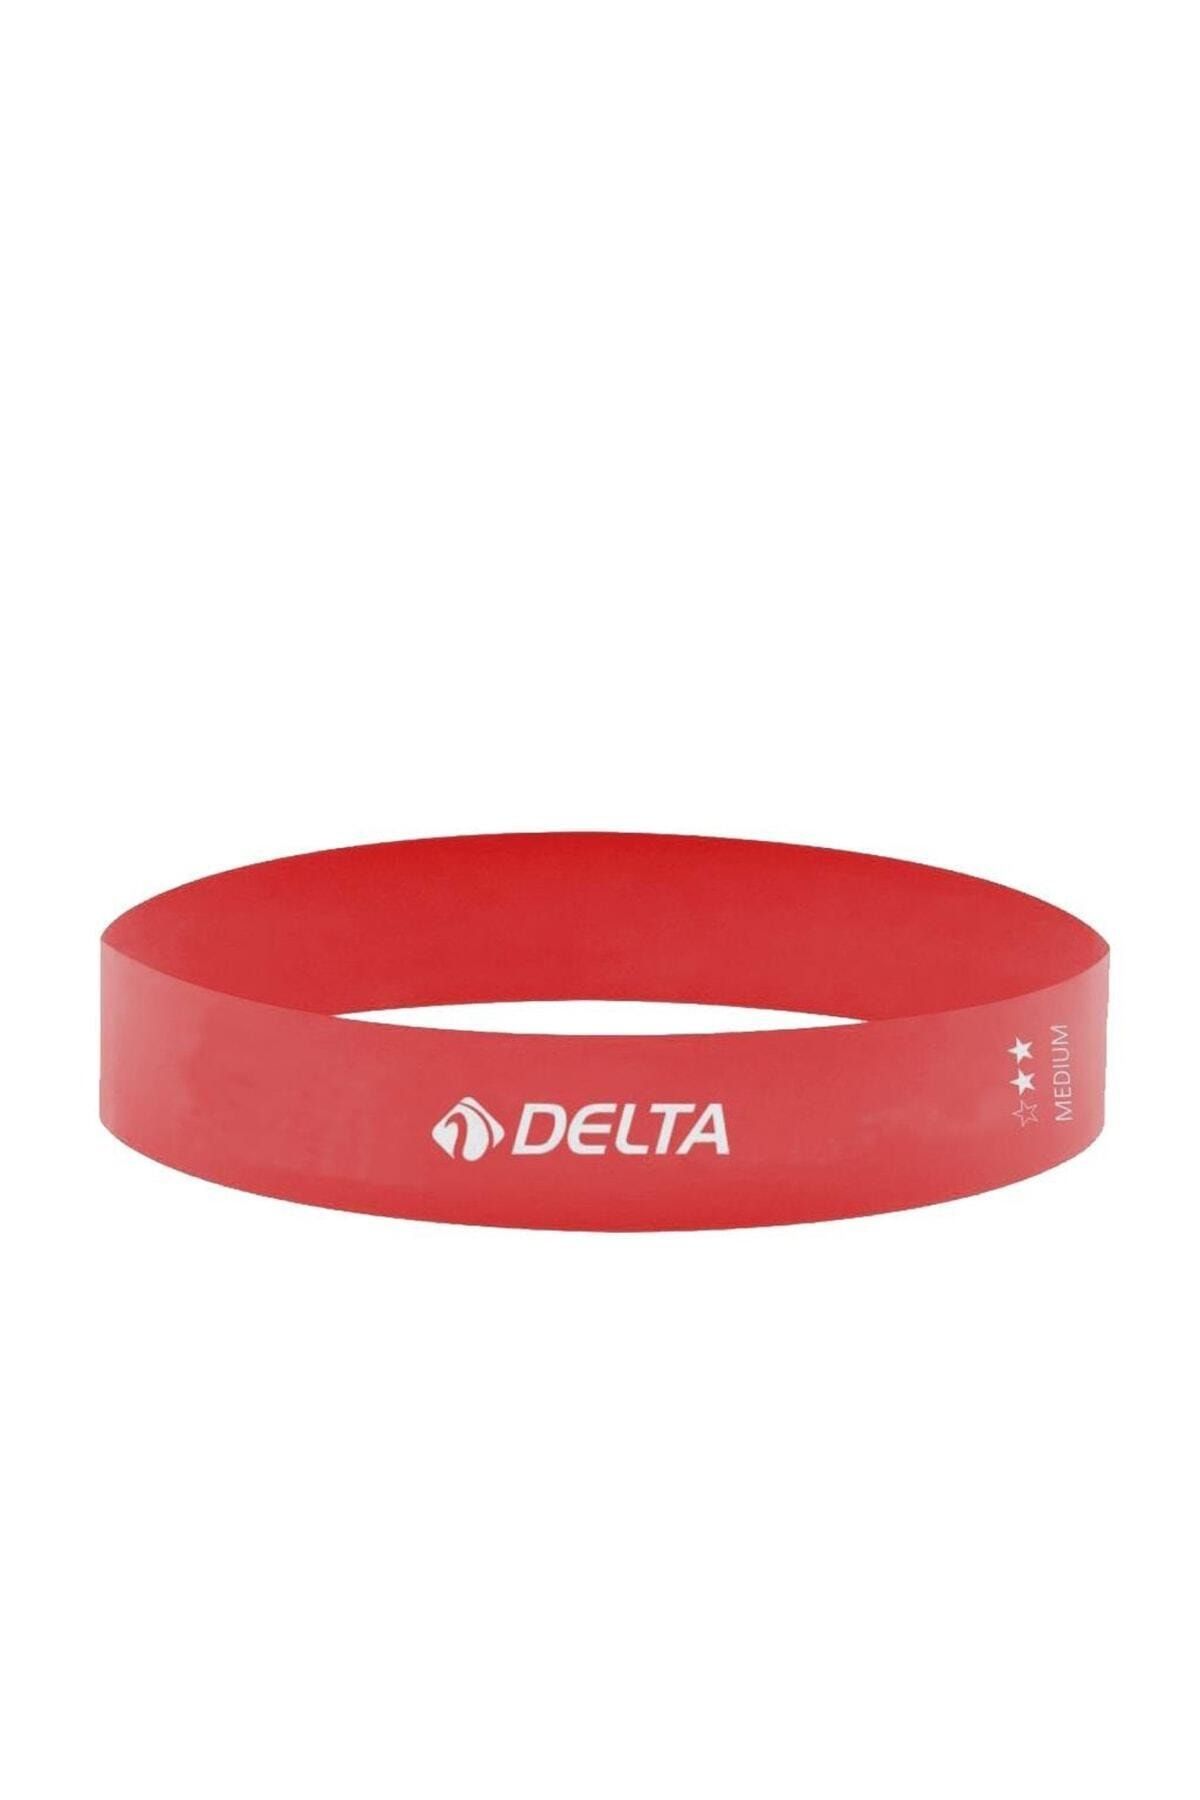 Delta Latex Orta Sert Aerobik Pilates Direnç Egzersiz Bandı Squat Çalışma Lastiği (UÇ KISMI KAPALI)